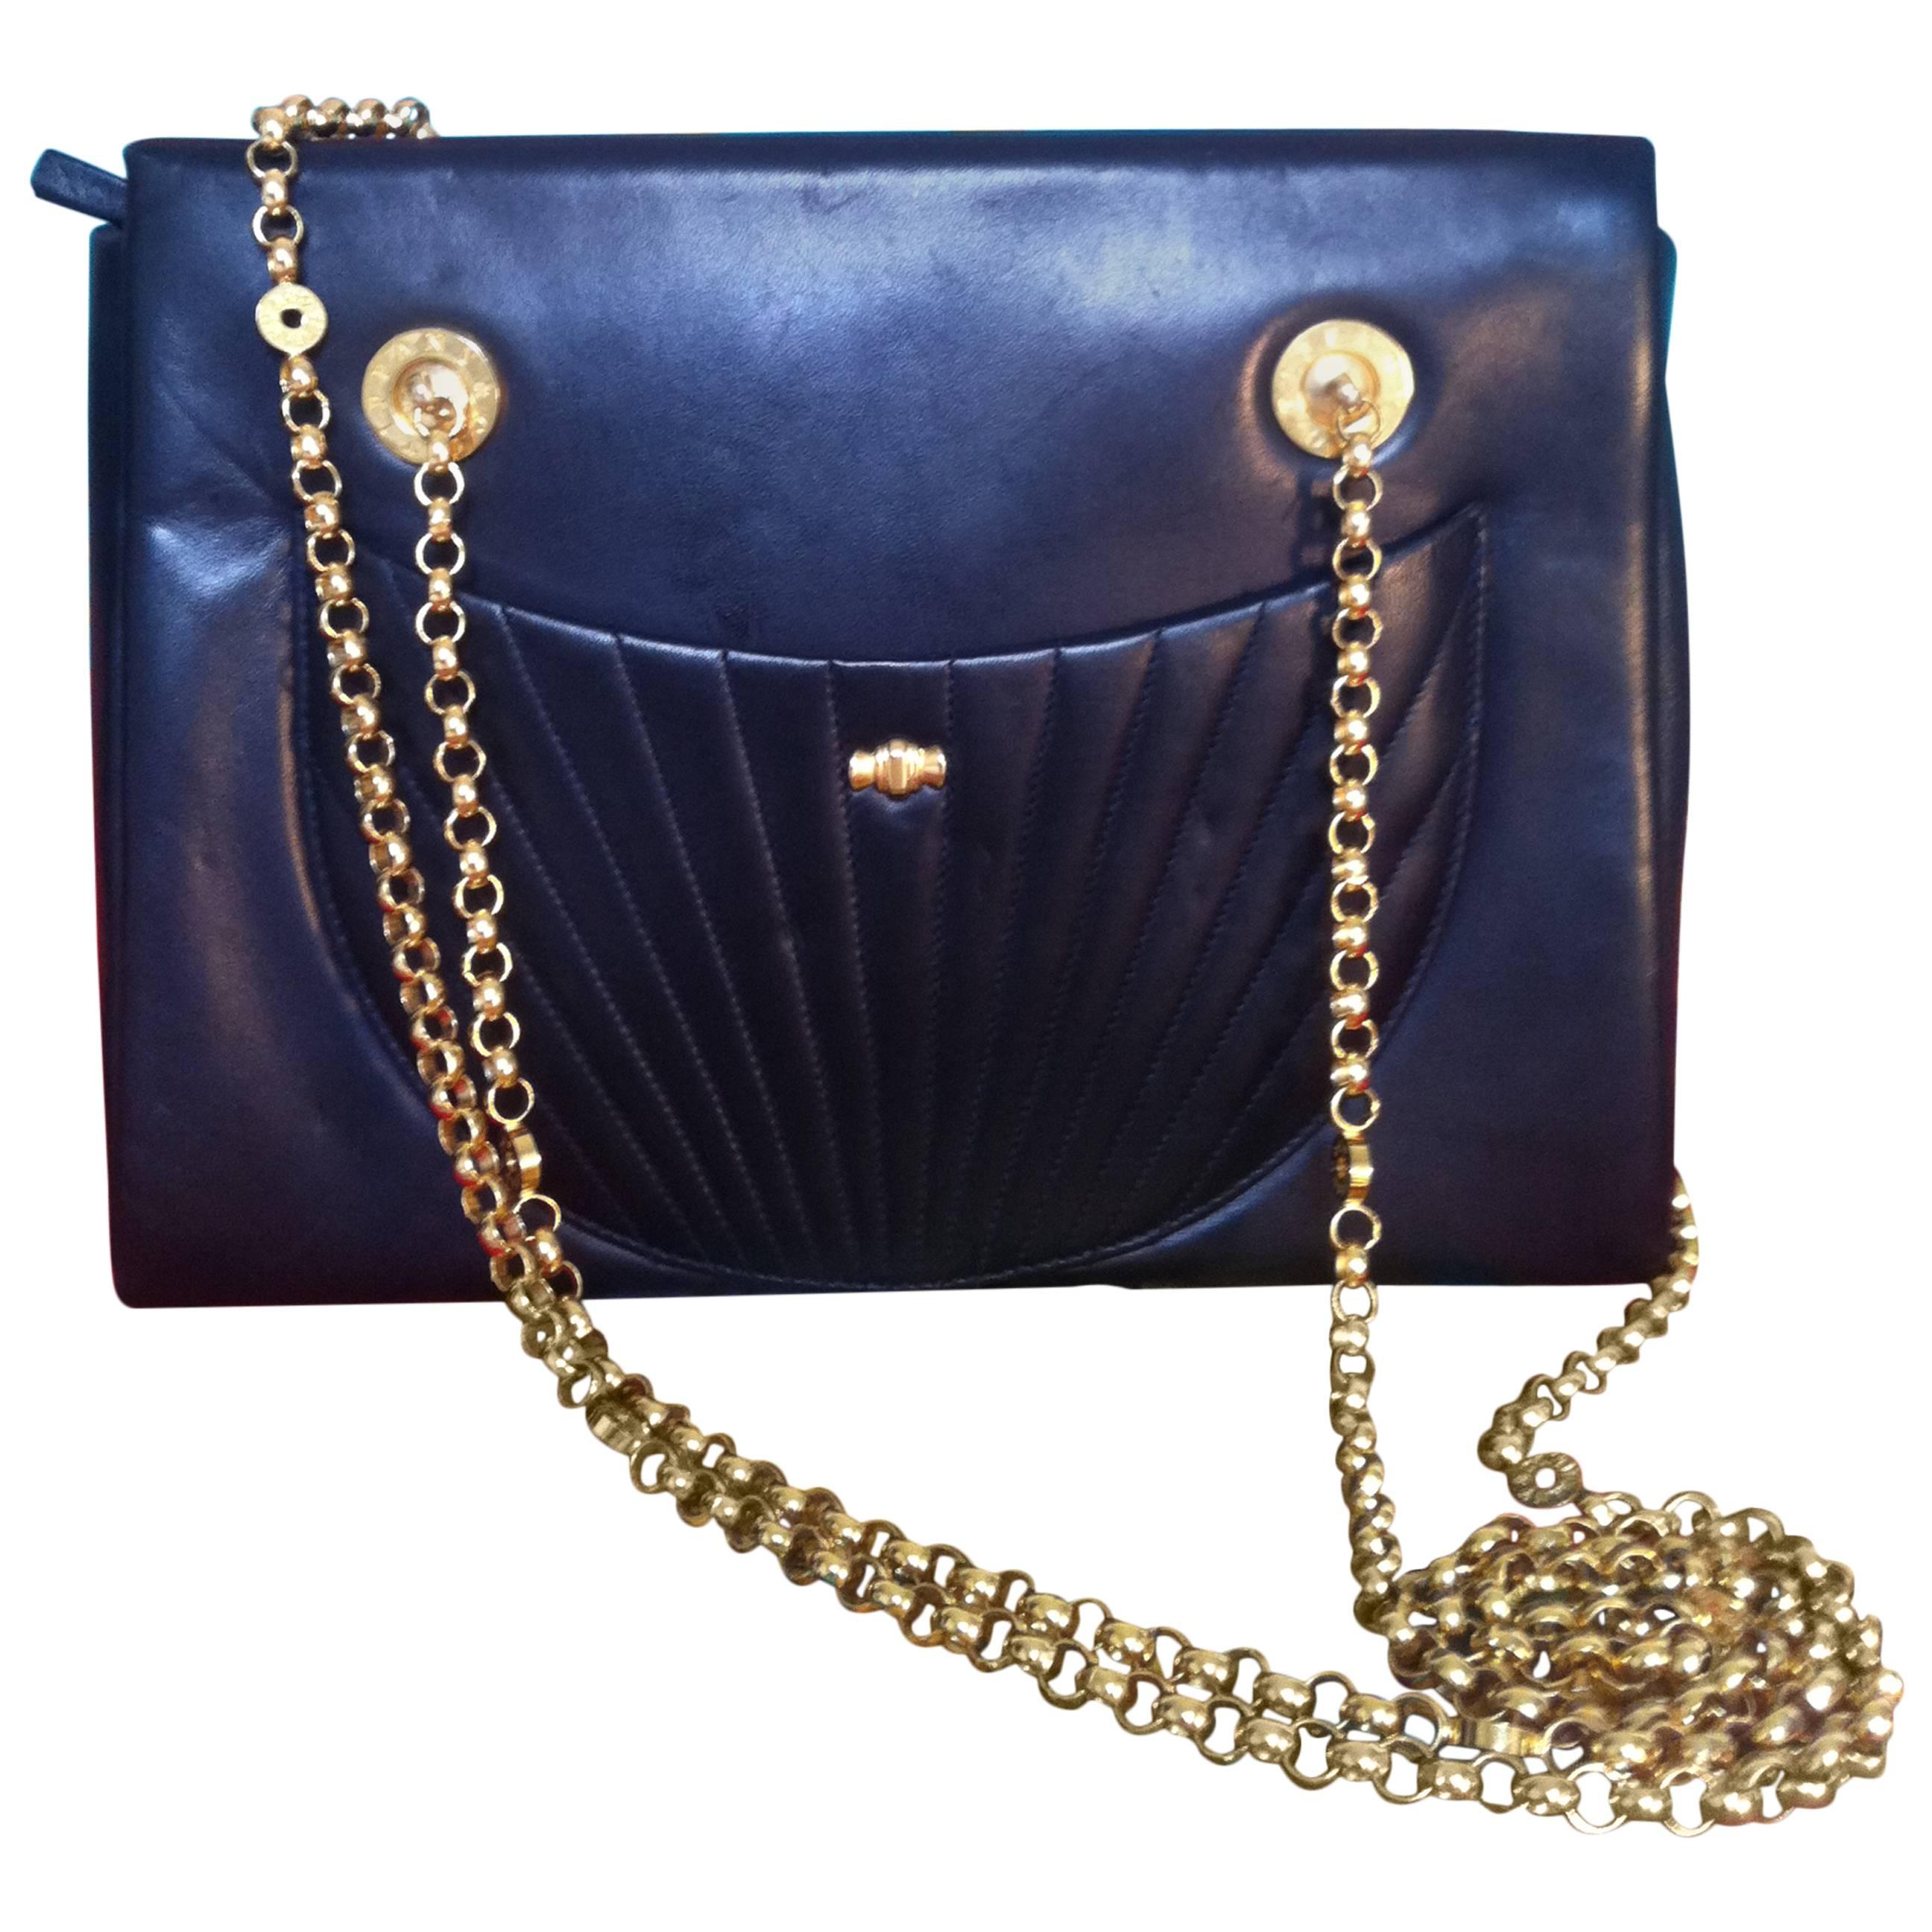 Vintage Tiffany black leather shoulder bag, tote with golden chain straps 